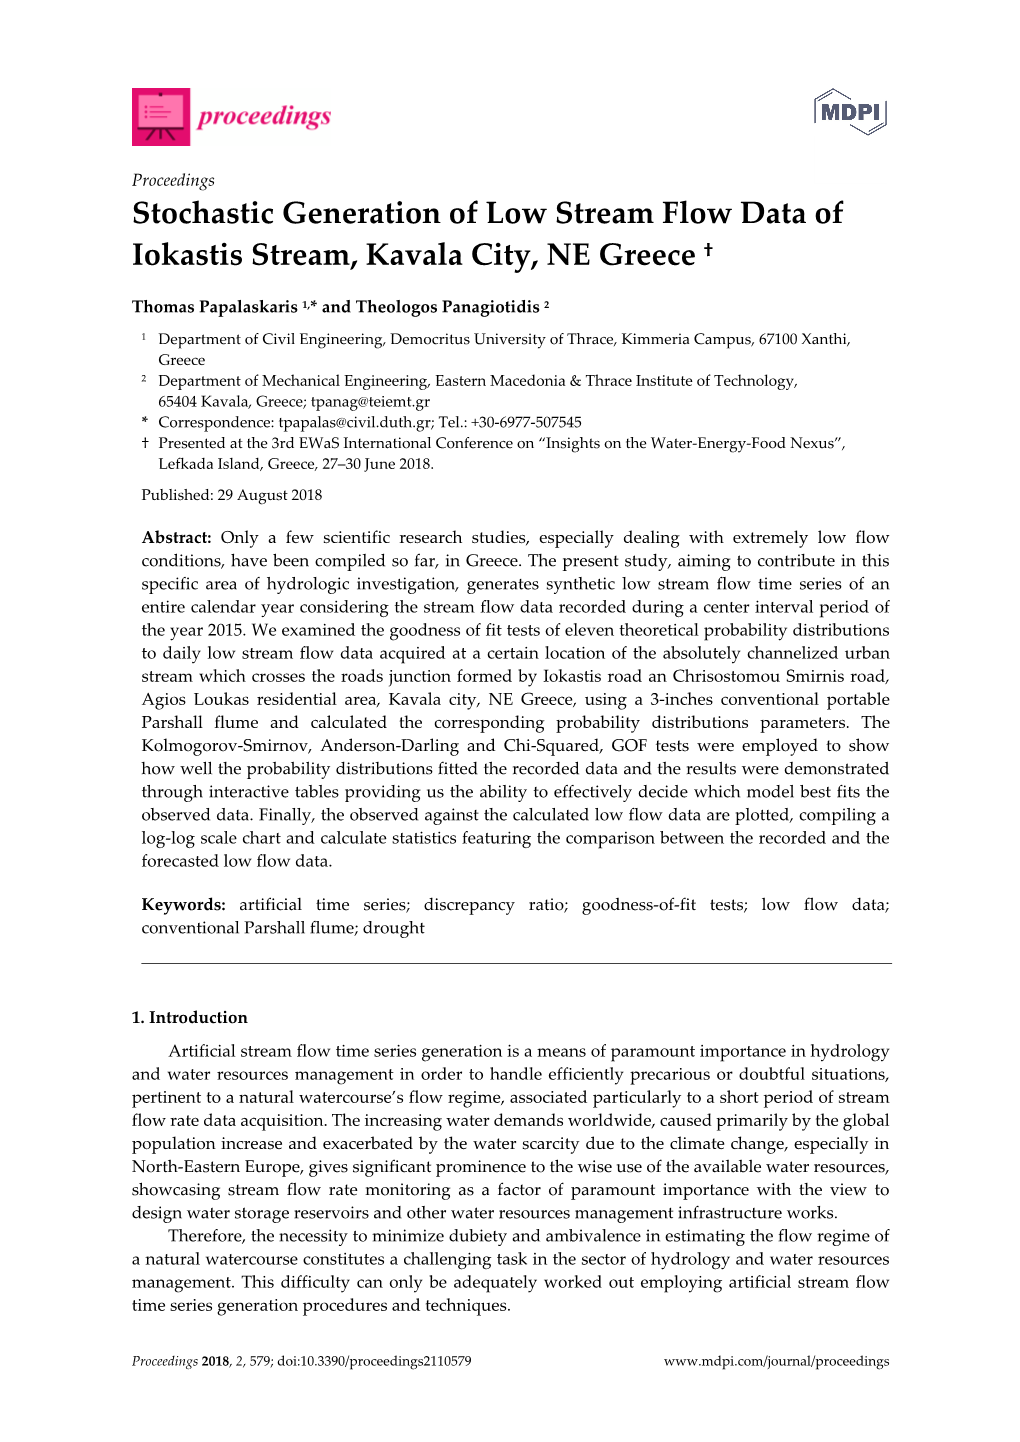 Stochastic Generation of Low Stream Flow Data of Iokastis Stream, Kavala City, NE Greece †